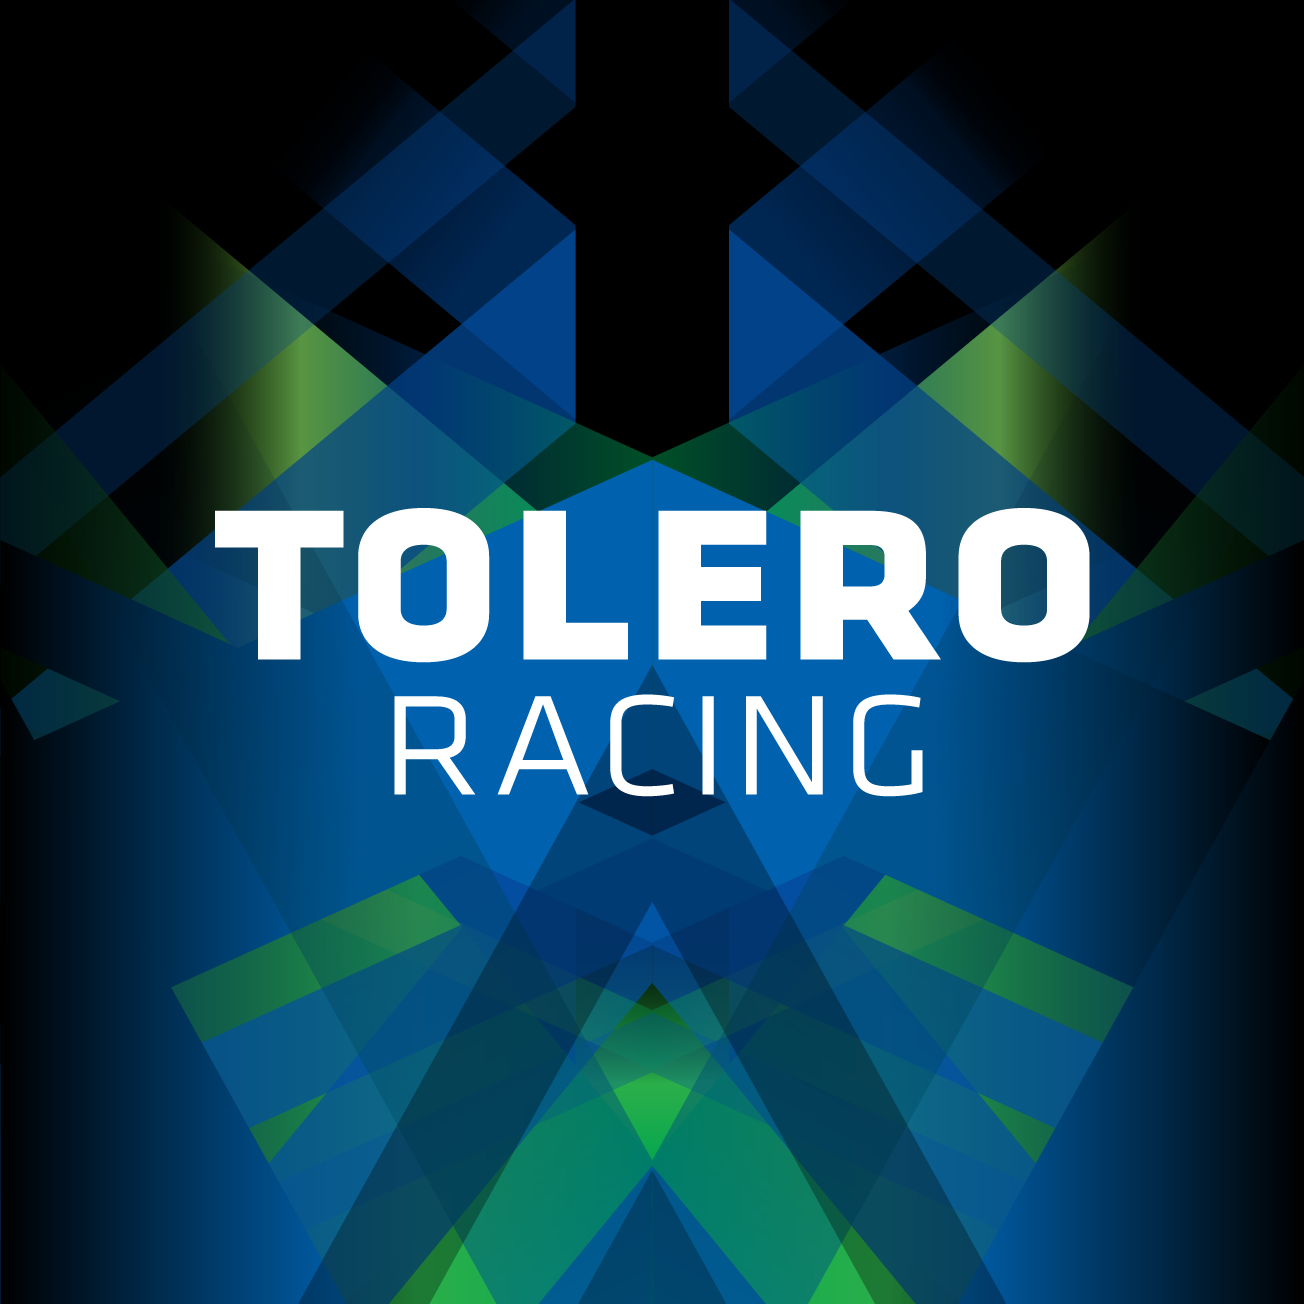 Club Image for TOLERO RACING